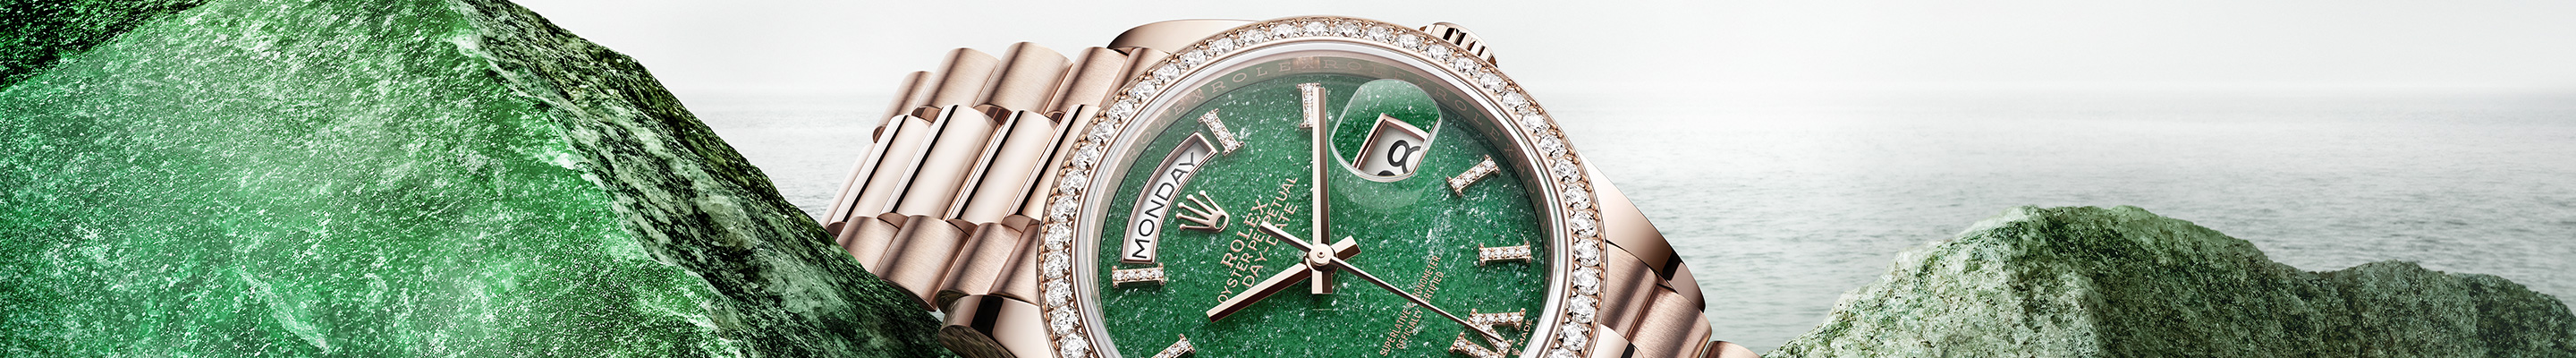 Rolex Watches MCLEAN, VIRGINIA Lenkersdorfer Jewelers